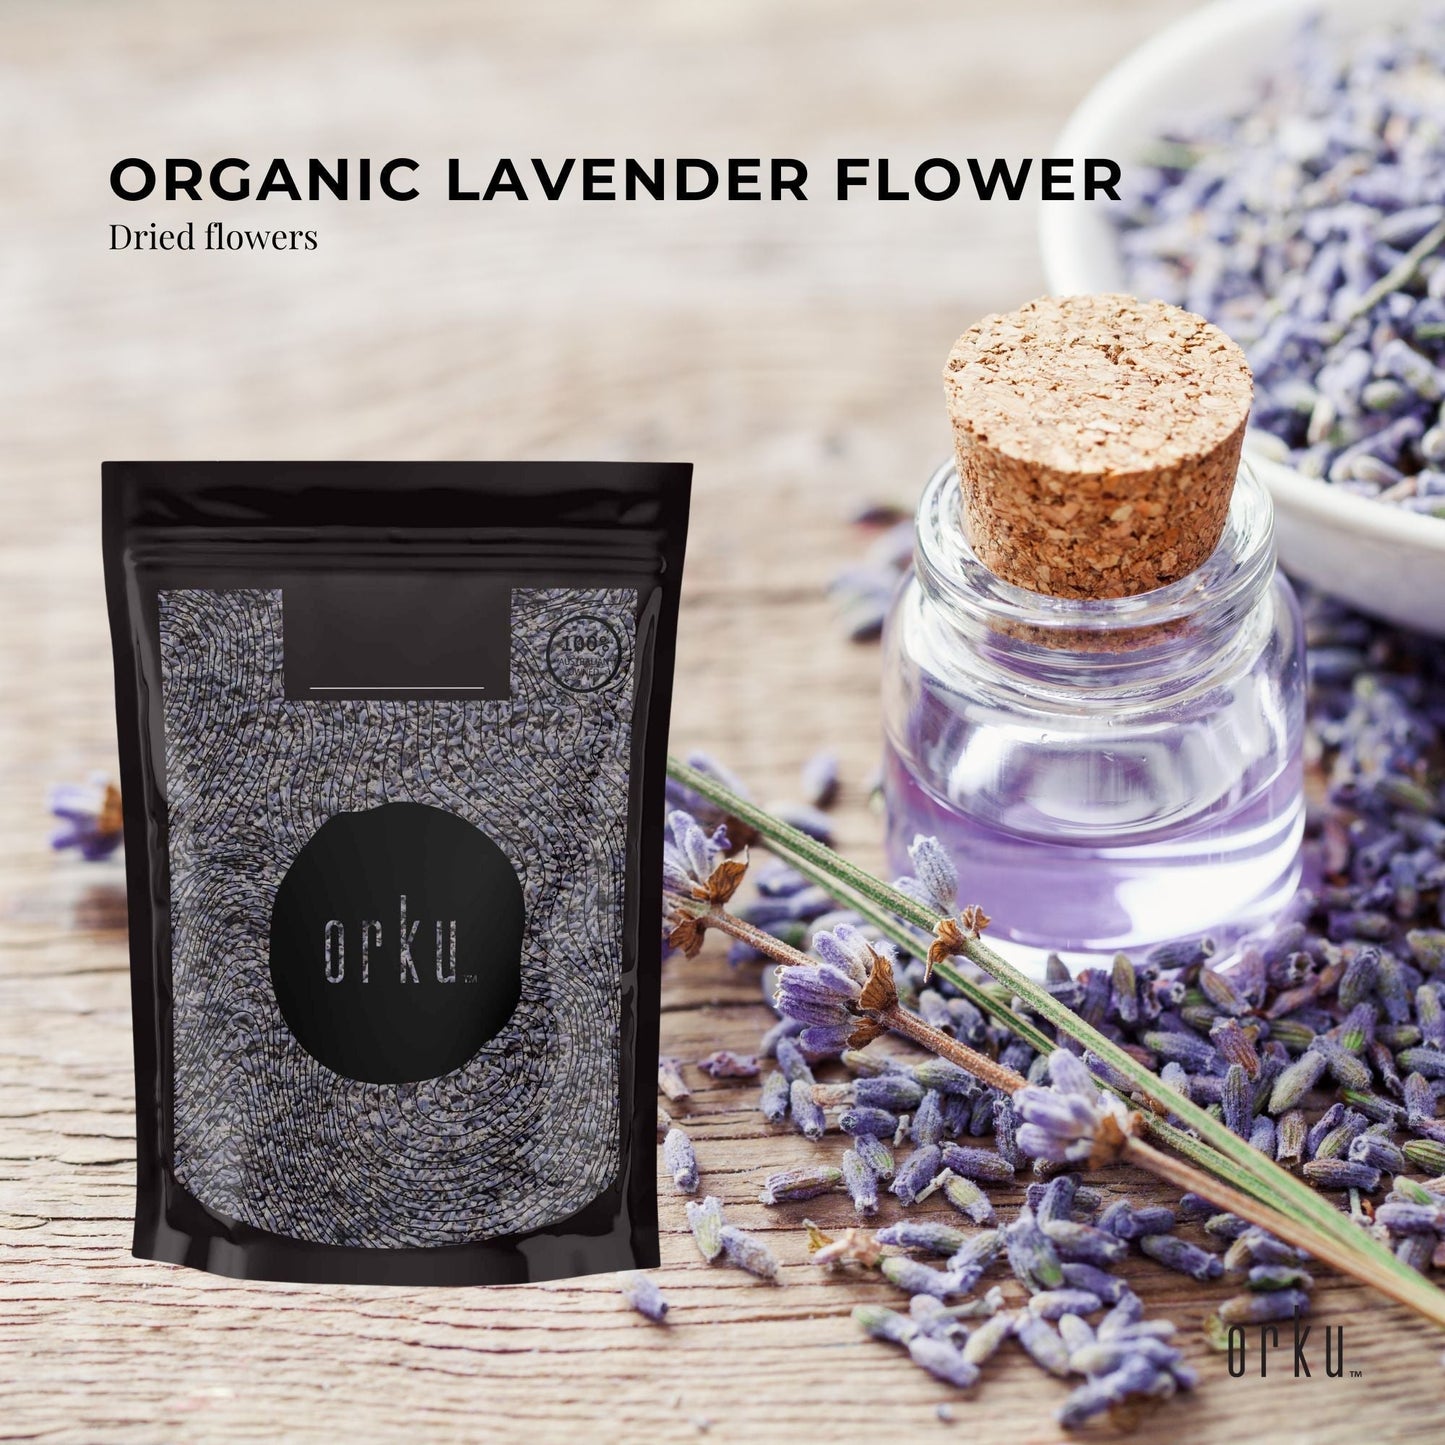 250g Organic Lavender Flower - Dried Fragrant Lavendula Angustifolia